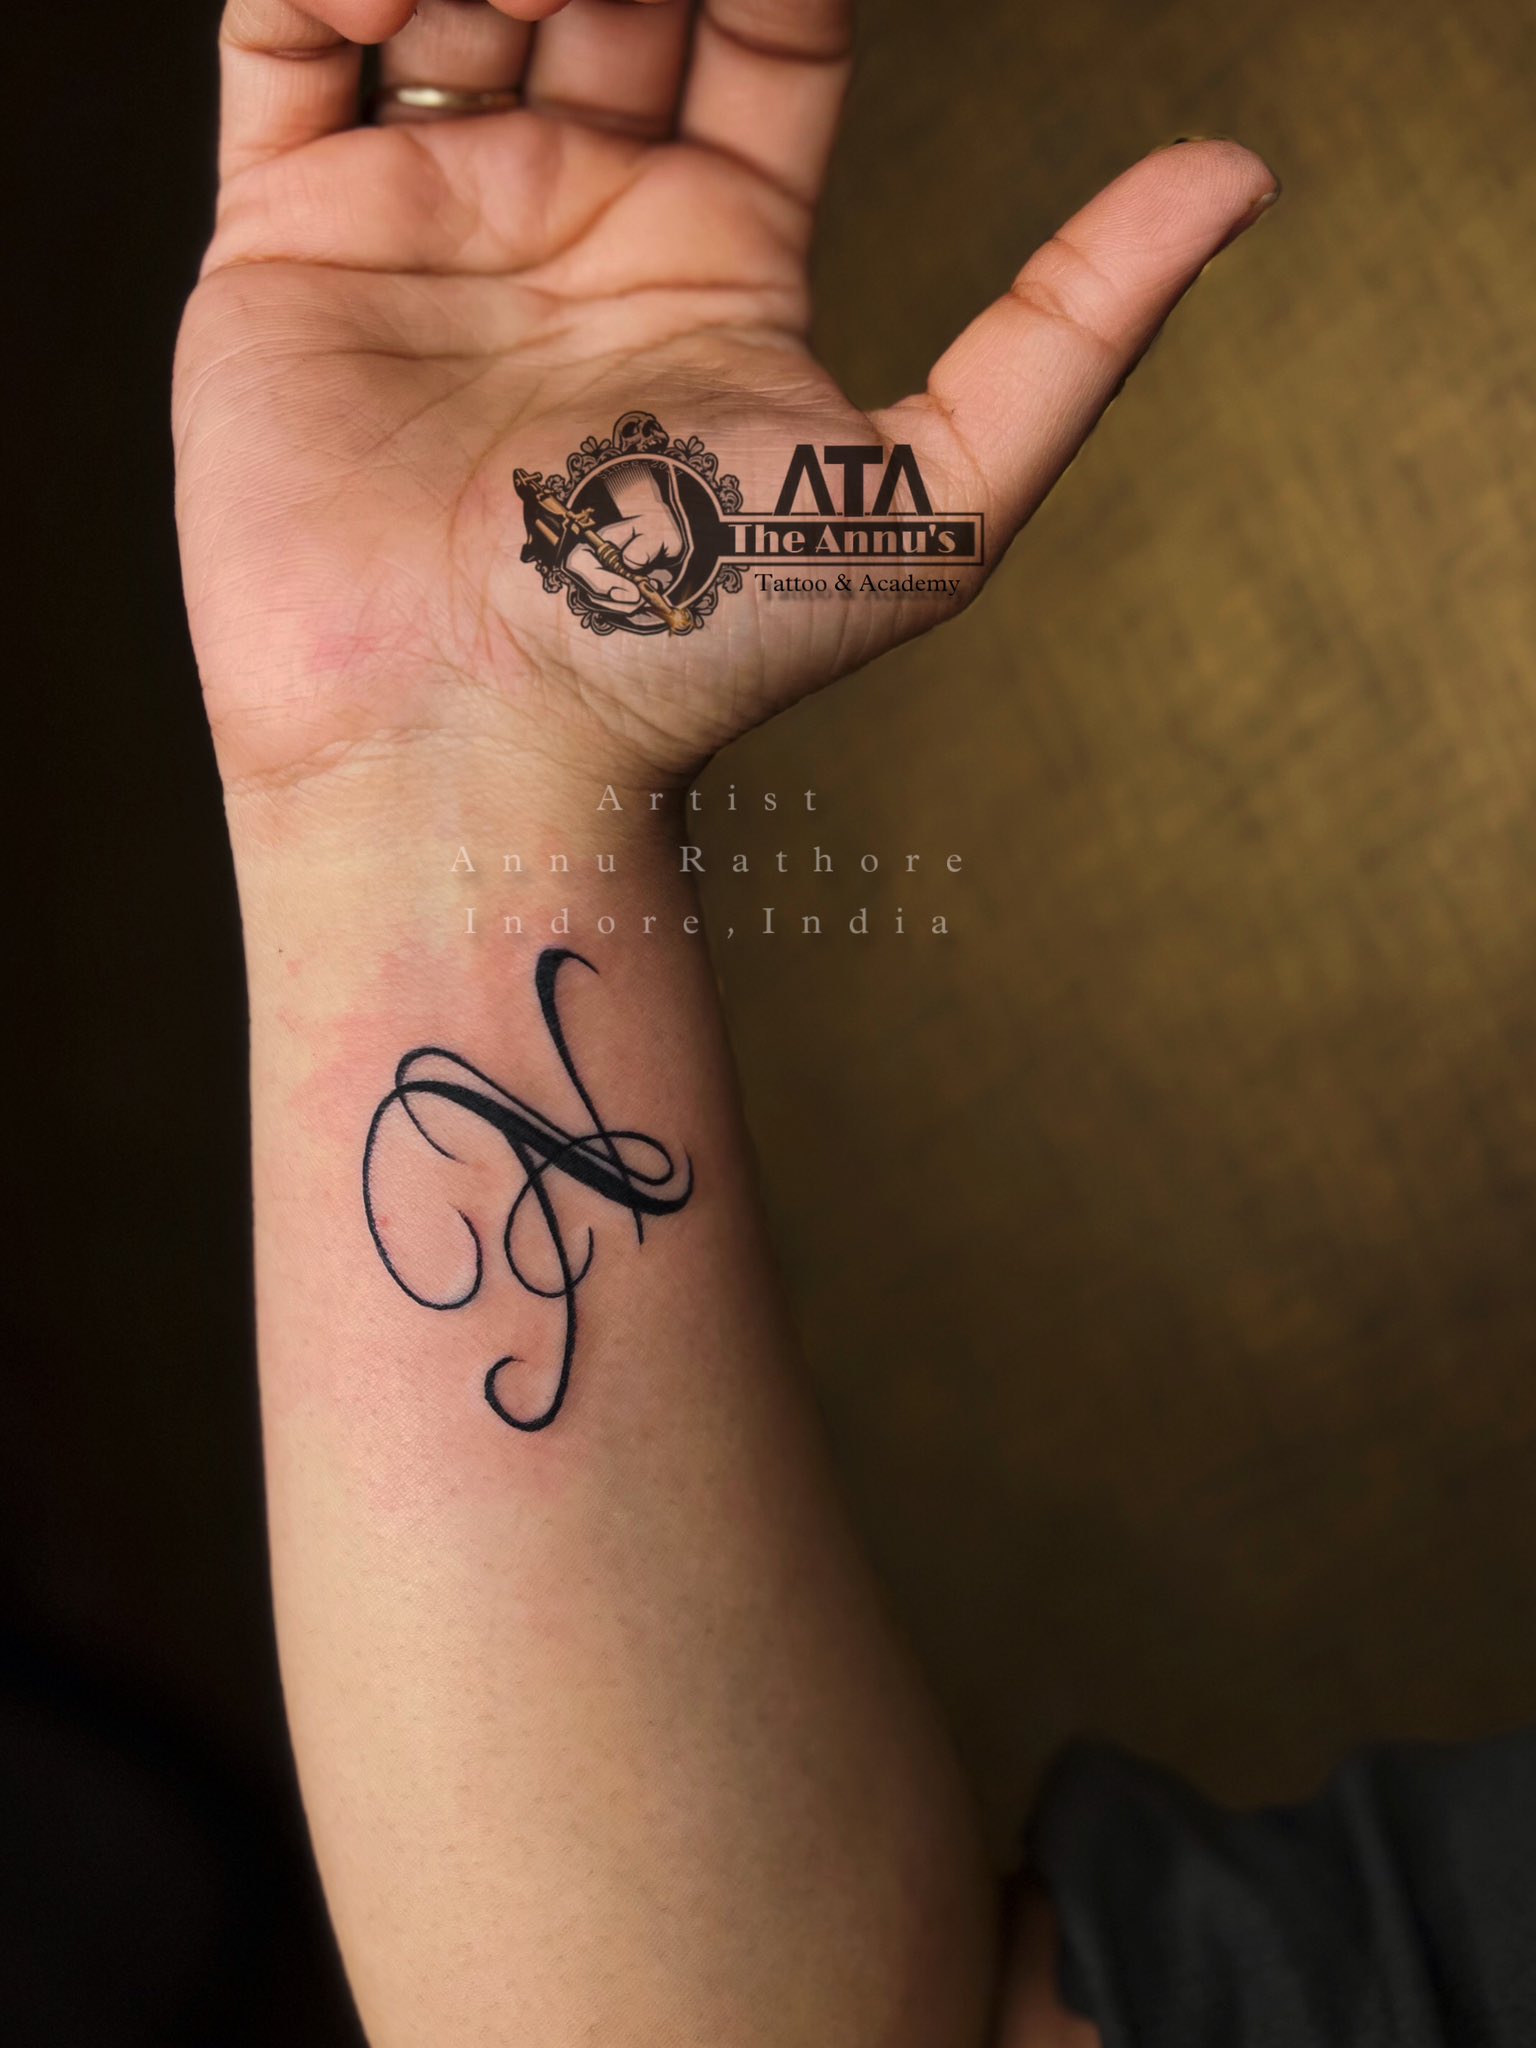 Lotus Unalome Tattoo Design!! @tattooist_annu_rathore  #TheArtThatDiesWithYou #tattooistannu #tattooart #meaningfultattoos Tattoo  by… | Instagram